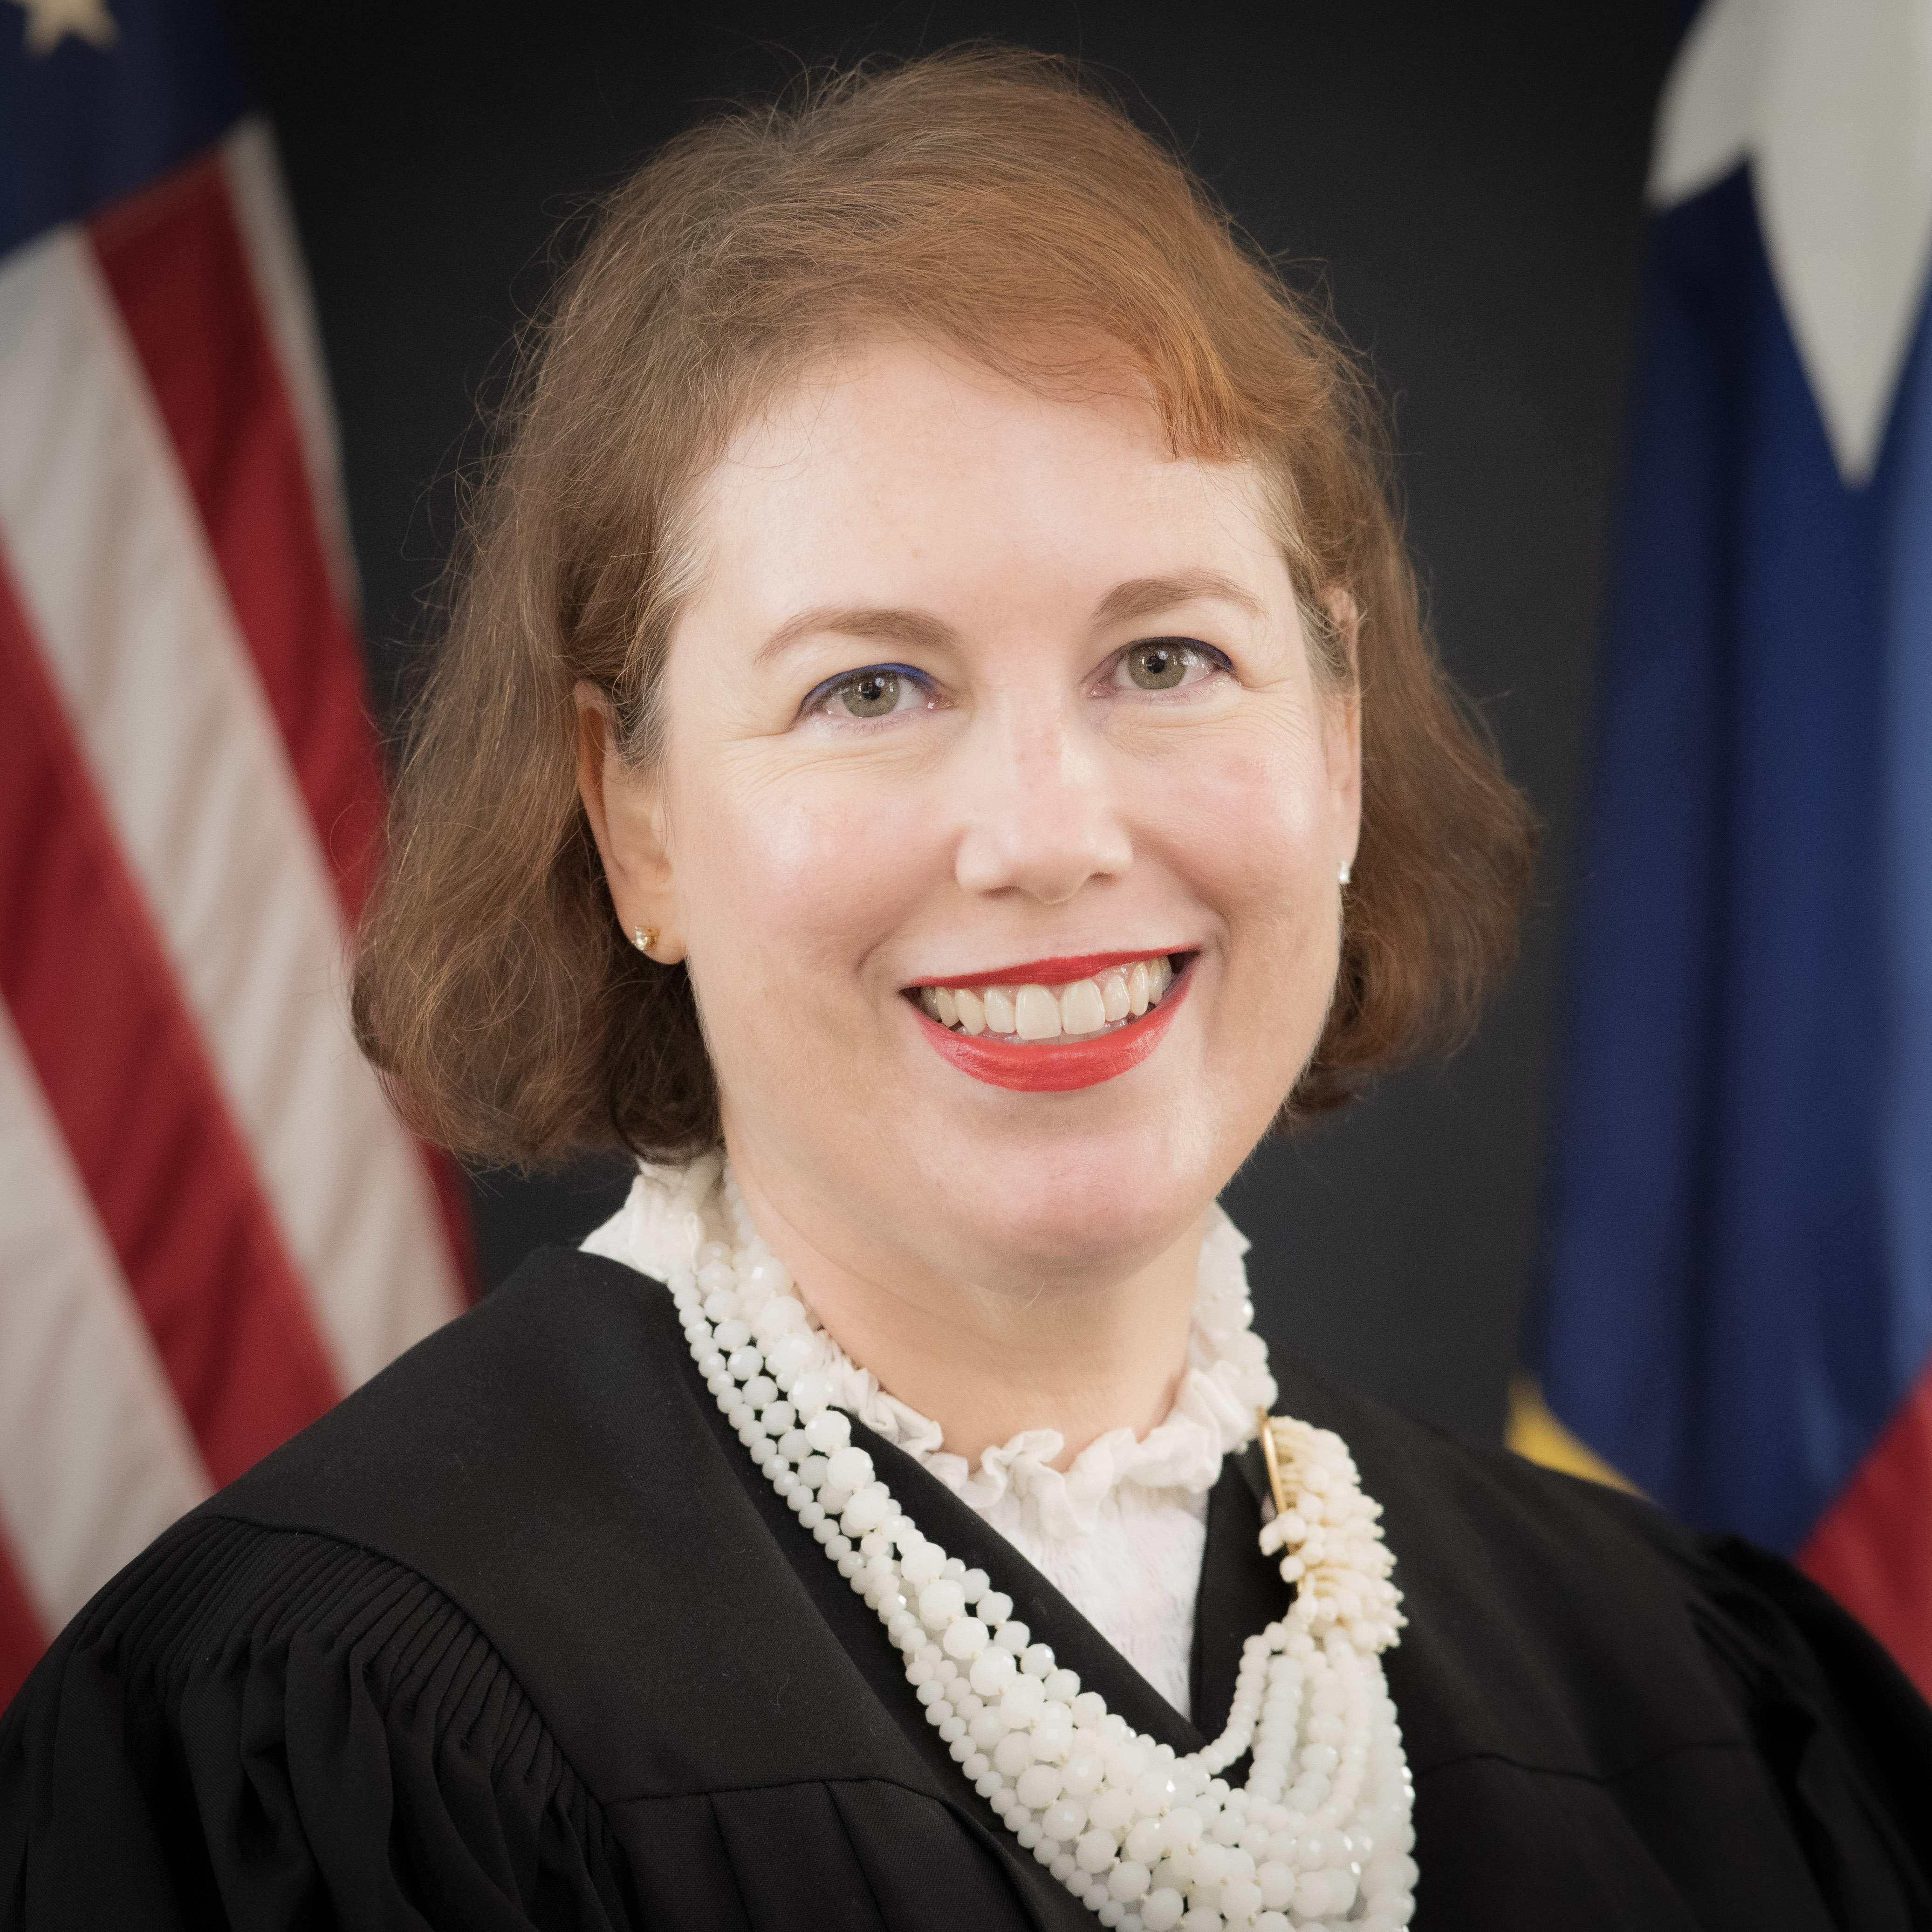 Photo of Justice Sarah Beth Landau